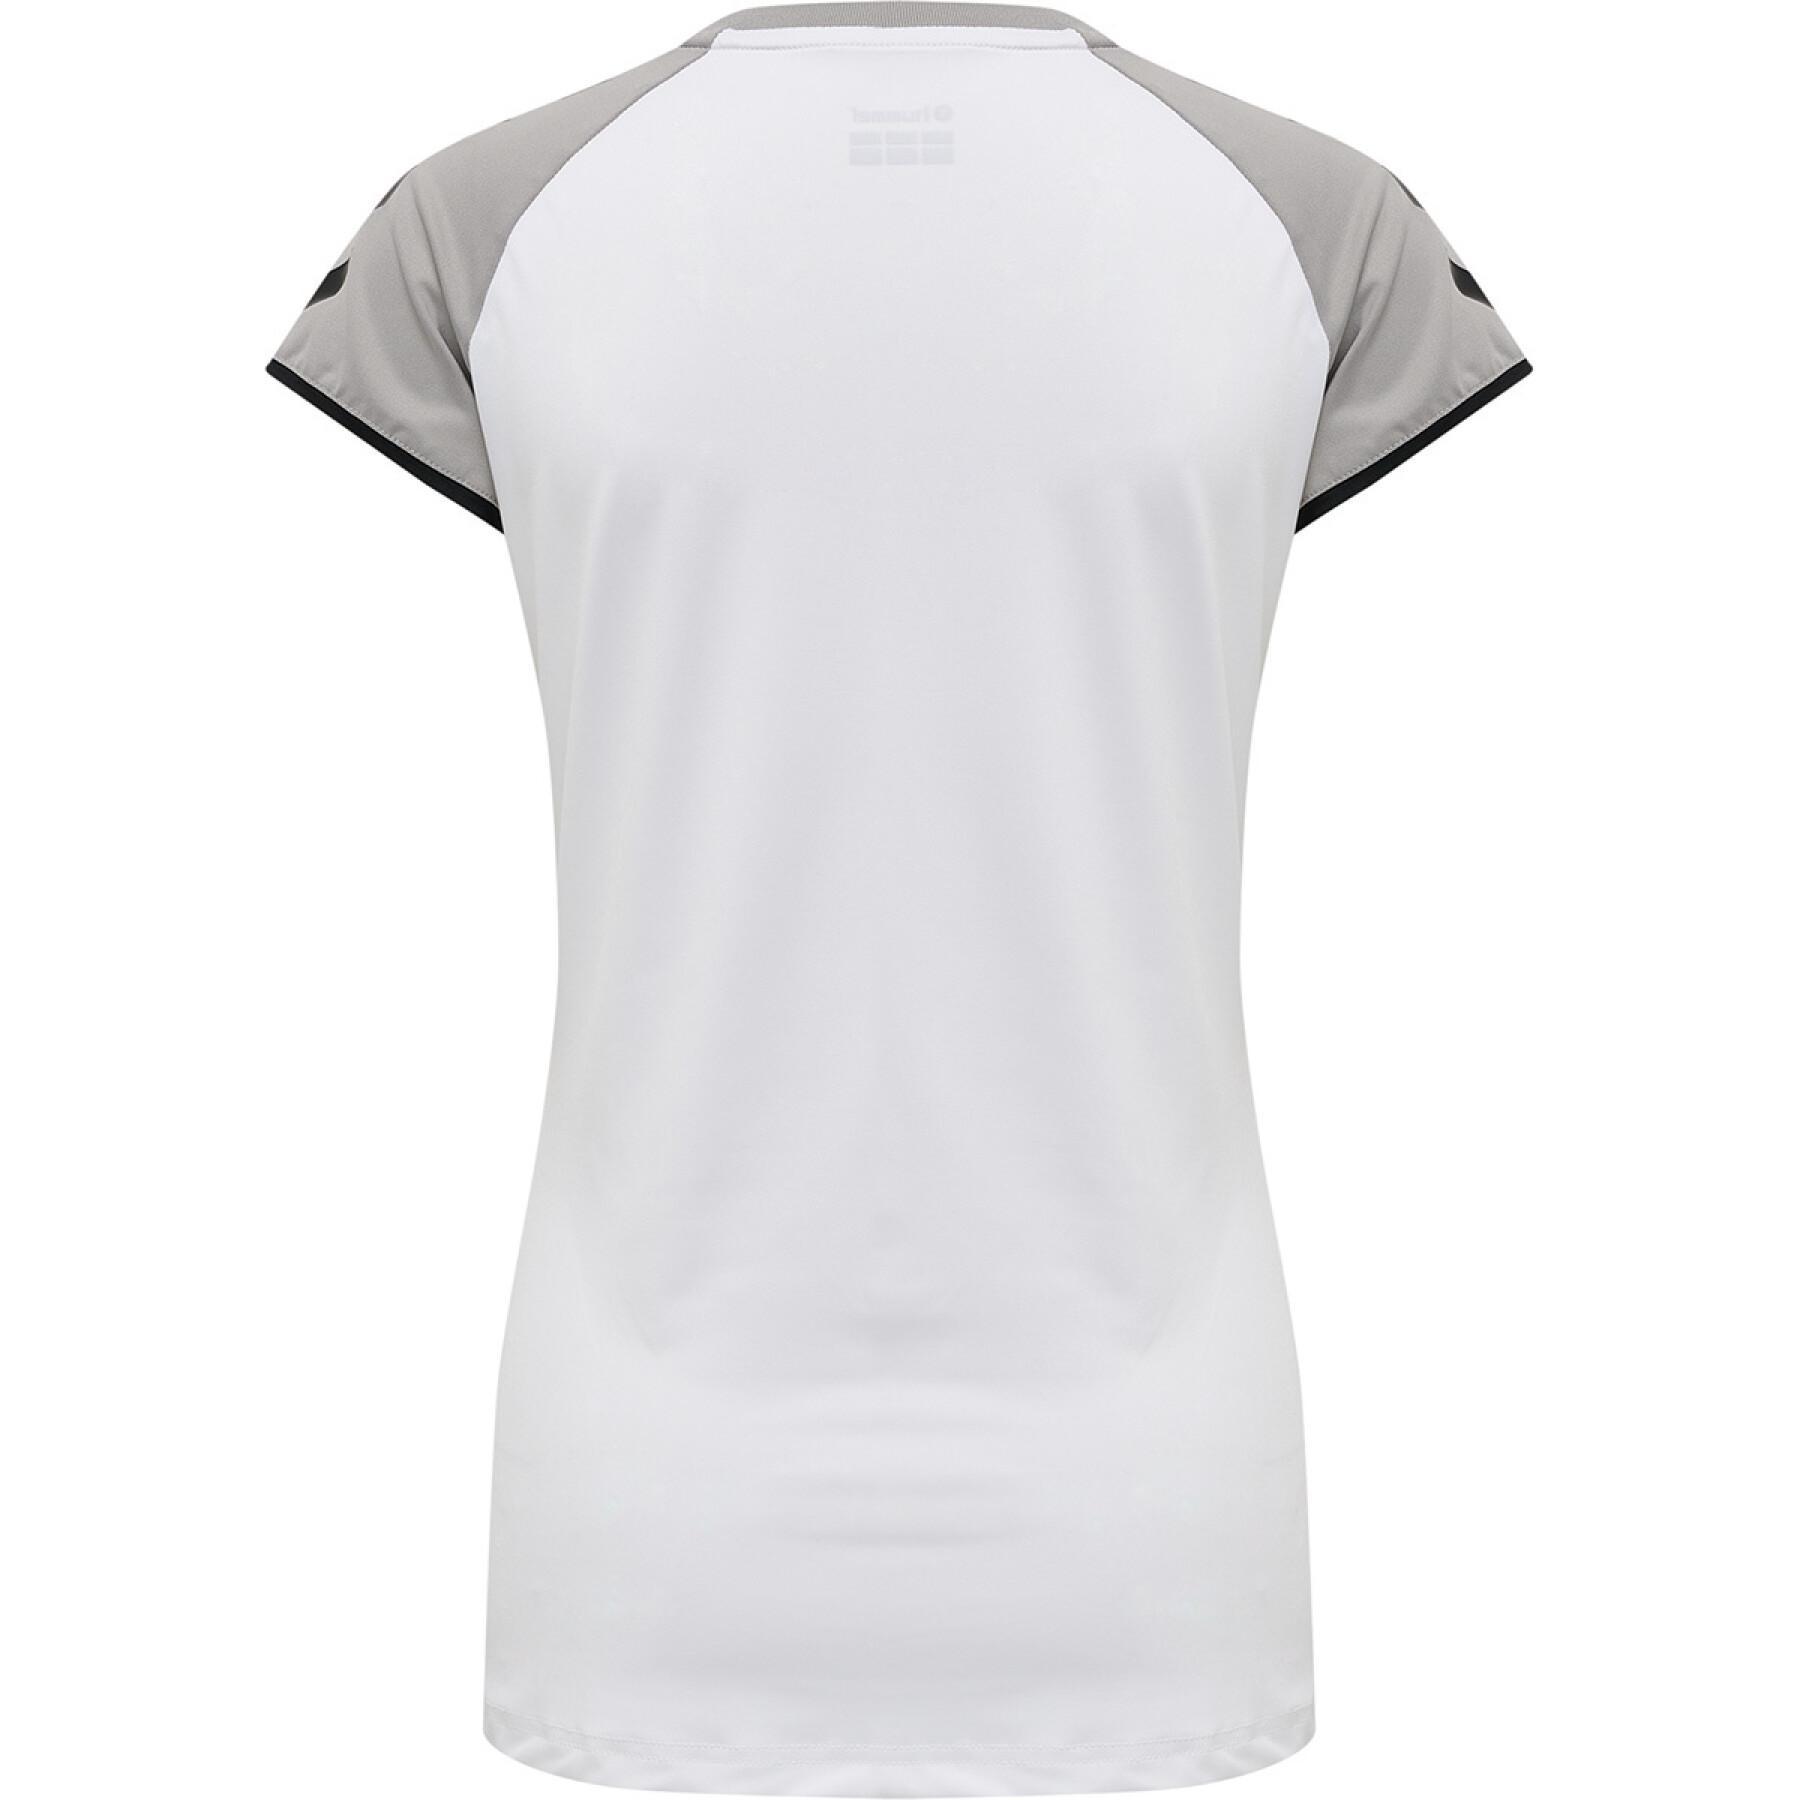 Dames-T-shirt Hummel hmlhmlCORE volley stretch